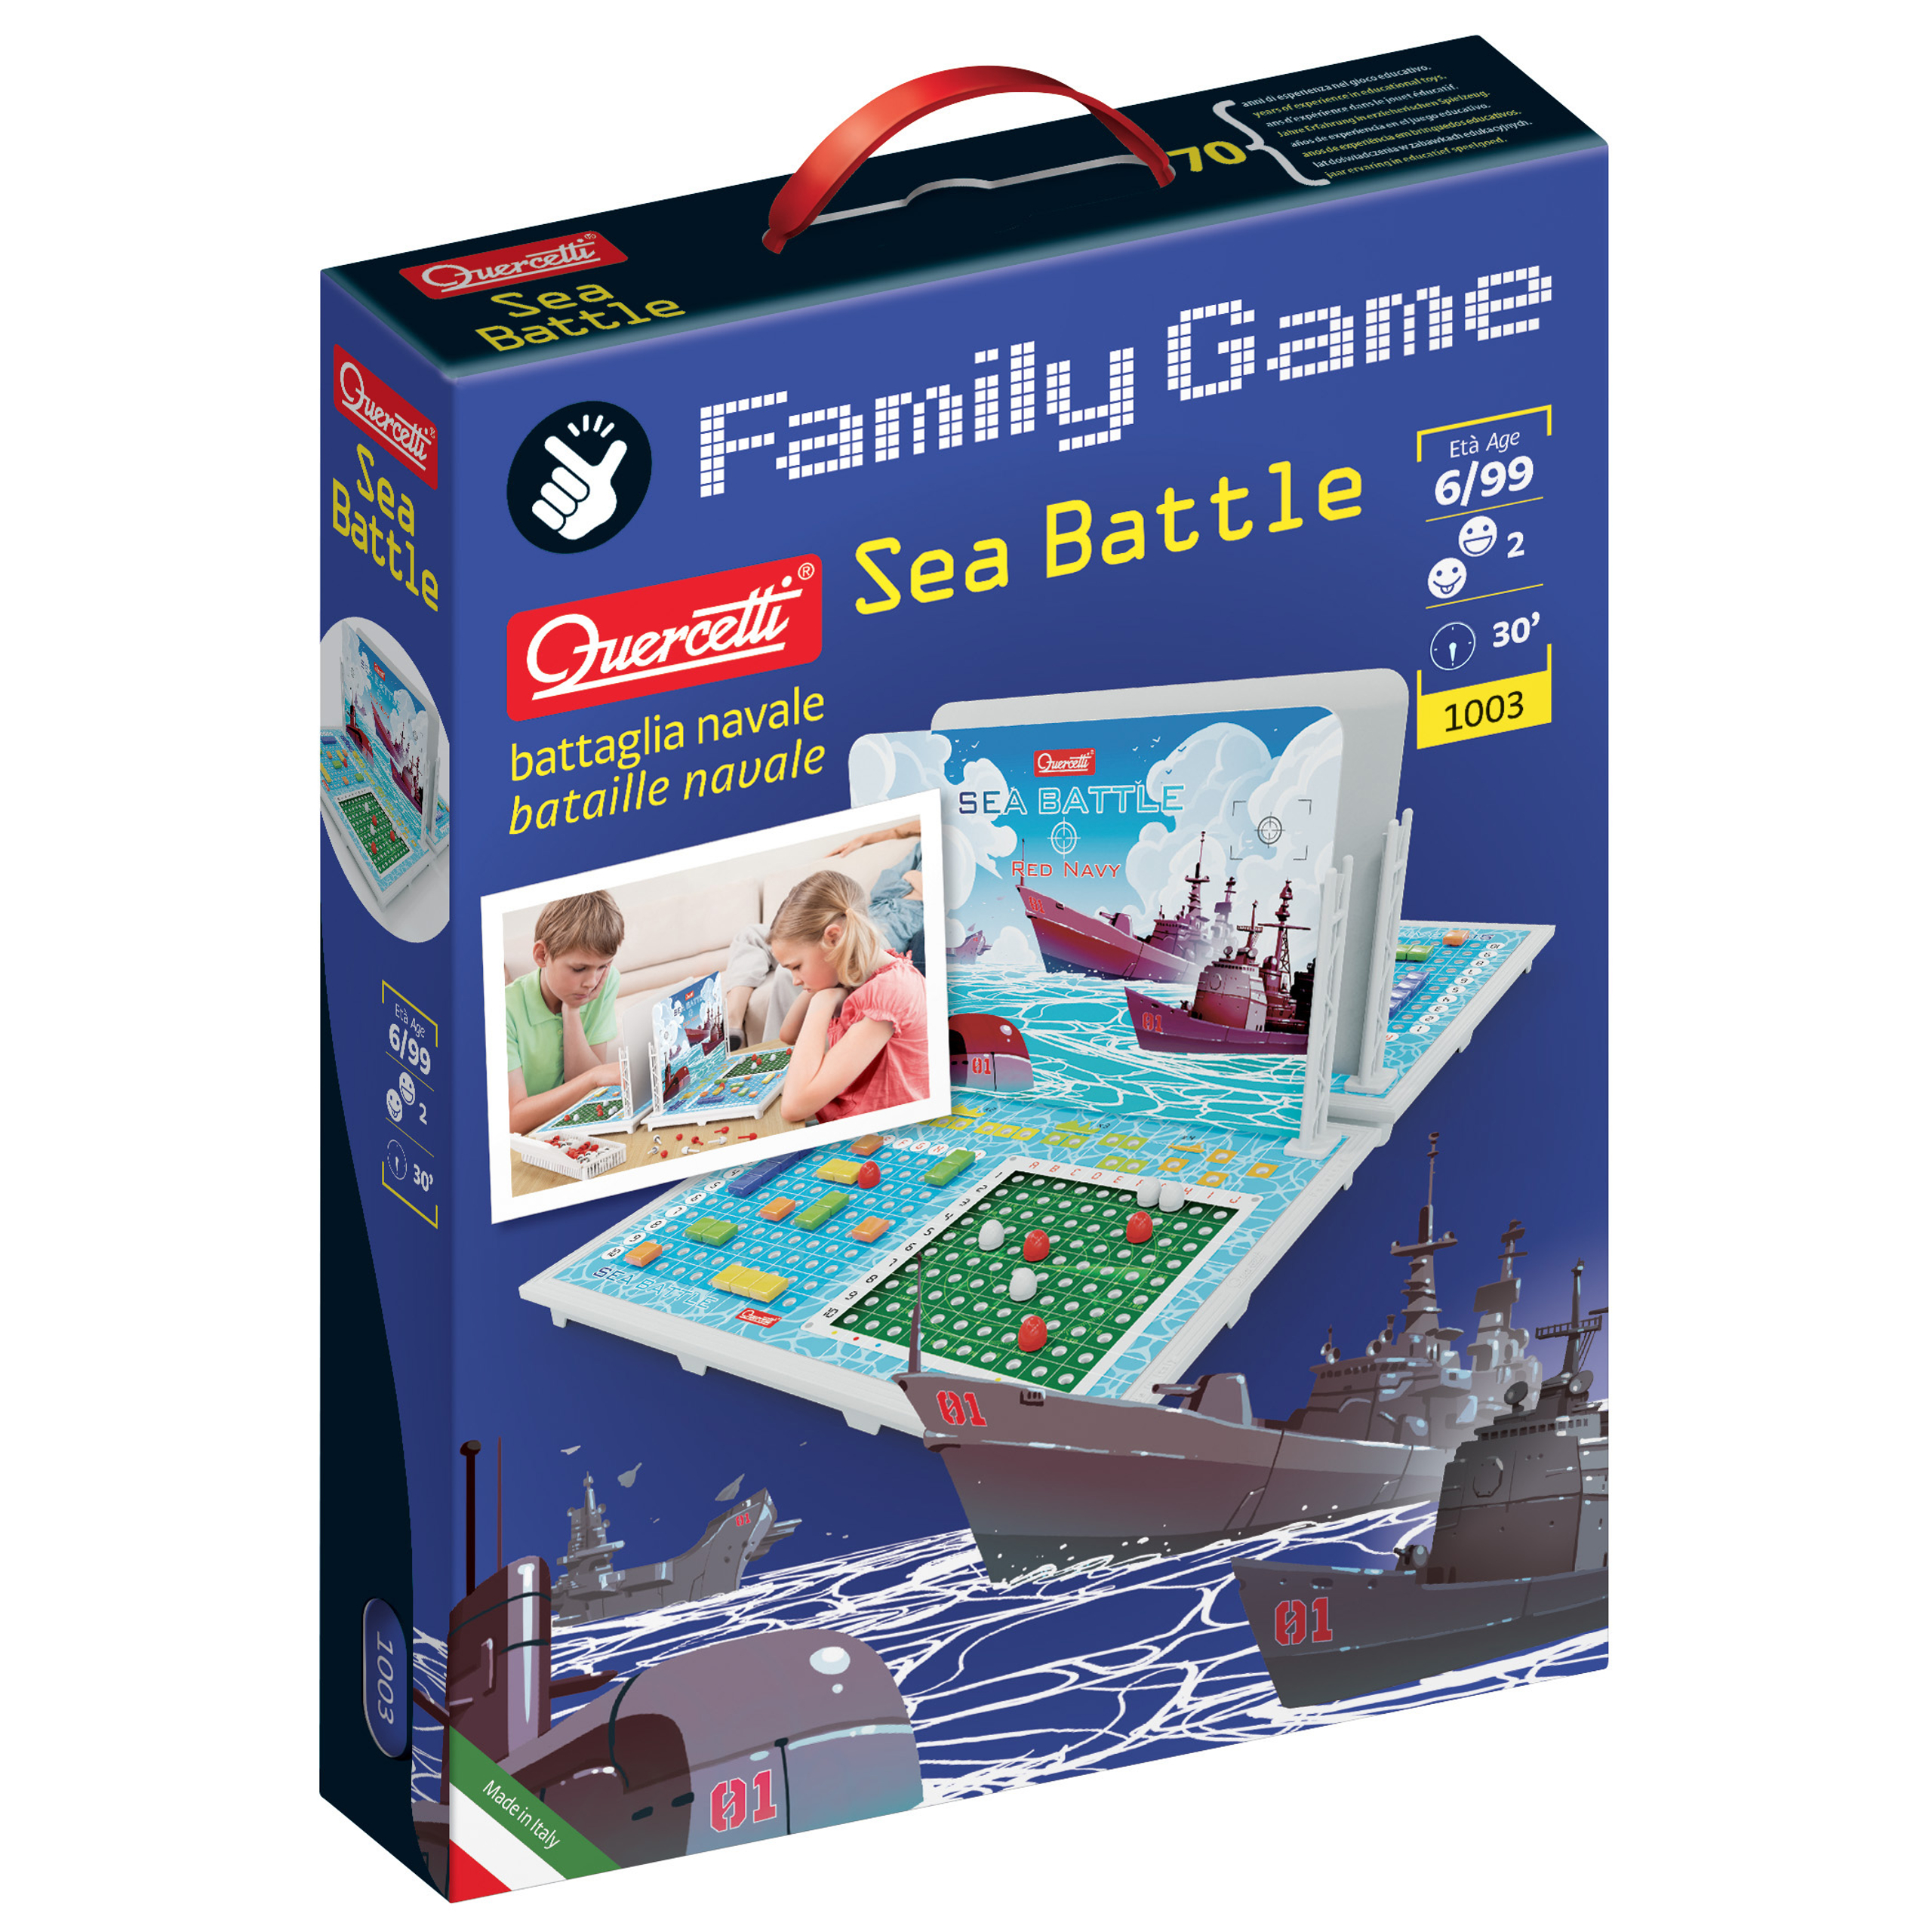 Spiele & Puzzles quercetti game sea battle